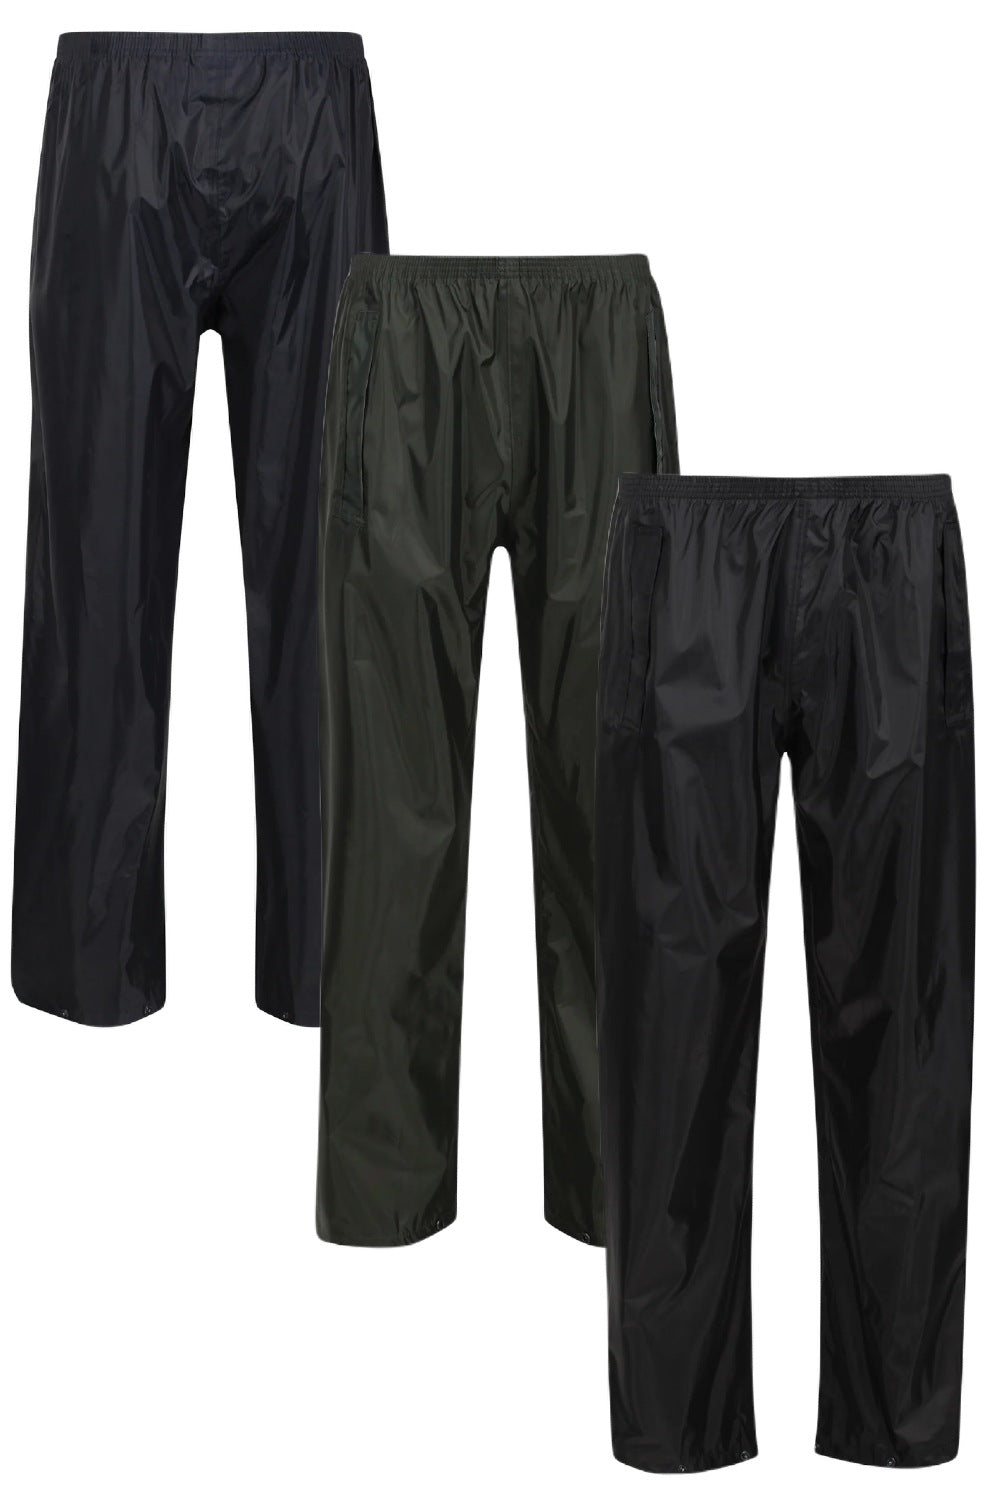 Regatta Pro Stormbreak Waterproof Overtrousers in Navy, Dark Olive and Black